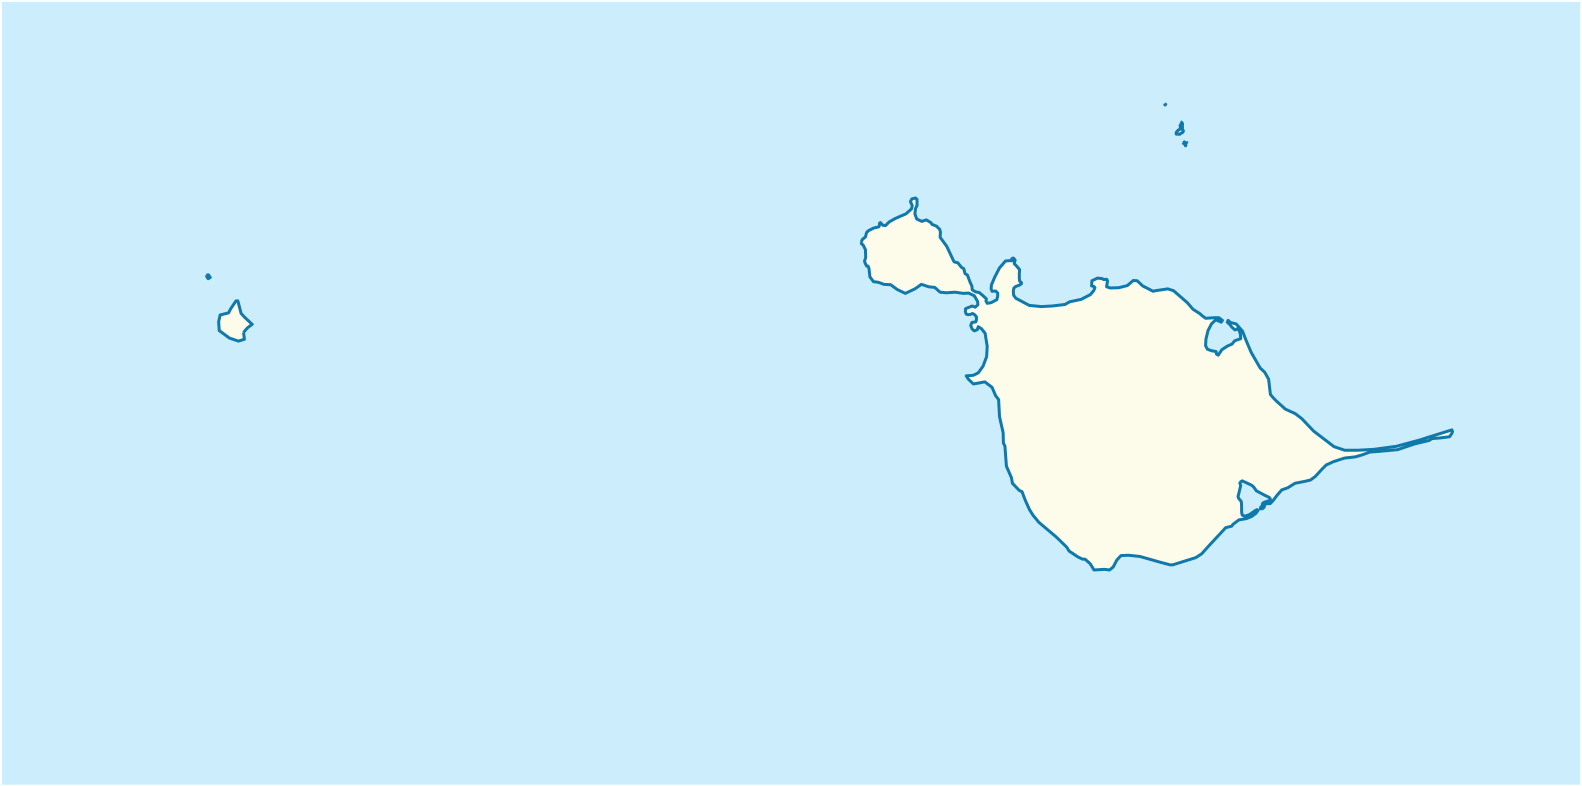 Остров Херд и острова Макдональд. Остров Макдональд на карте. Херд и Макдональд на карте. Острова Херд и Макдональд на карте.